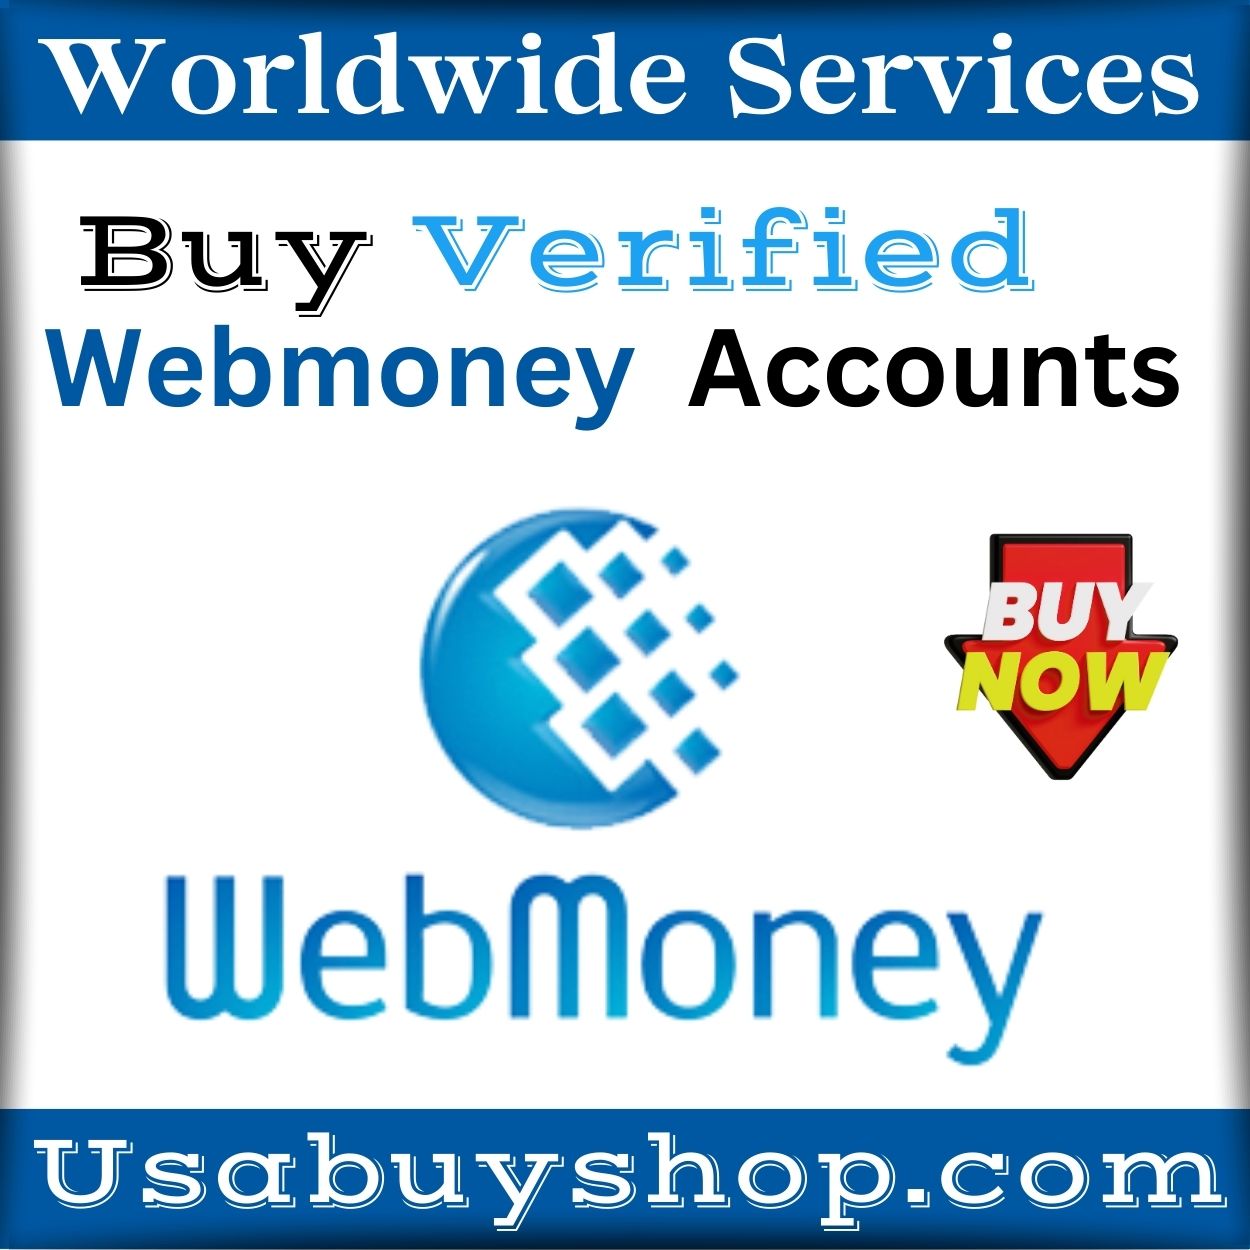 Buy Verified Webmoney Accounts - 100% Verified Account